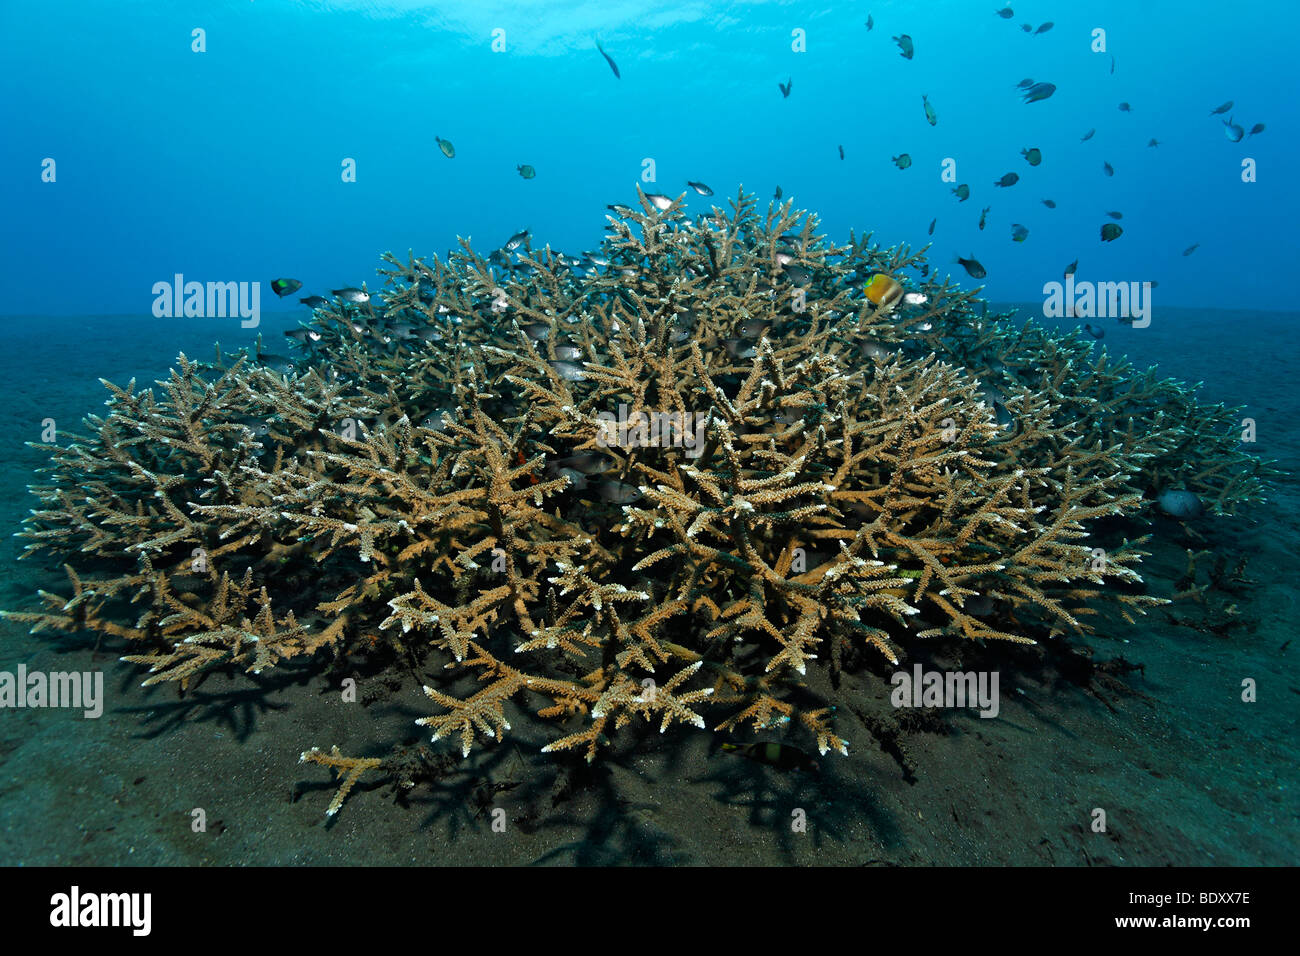 Large Agropora coral (Acropora sp.), hidaway, fish, branching, Bali, island, Lesser Sunda Islands, Bali Sea, Indonesia, Indian  Stock Photo